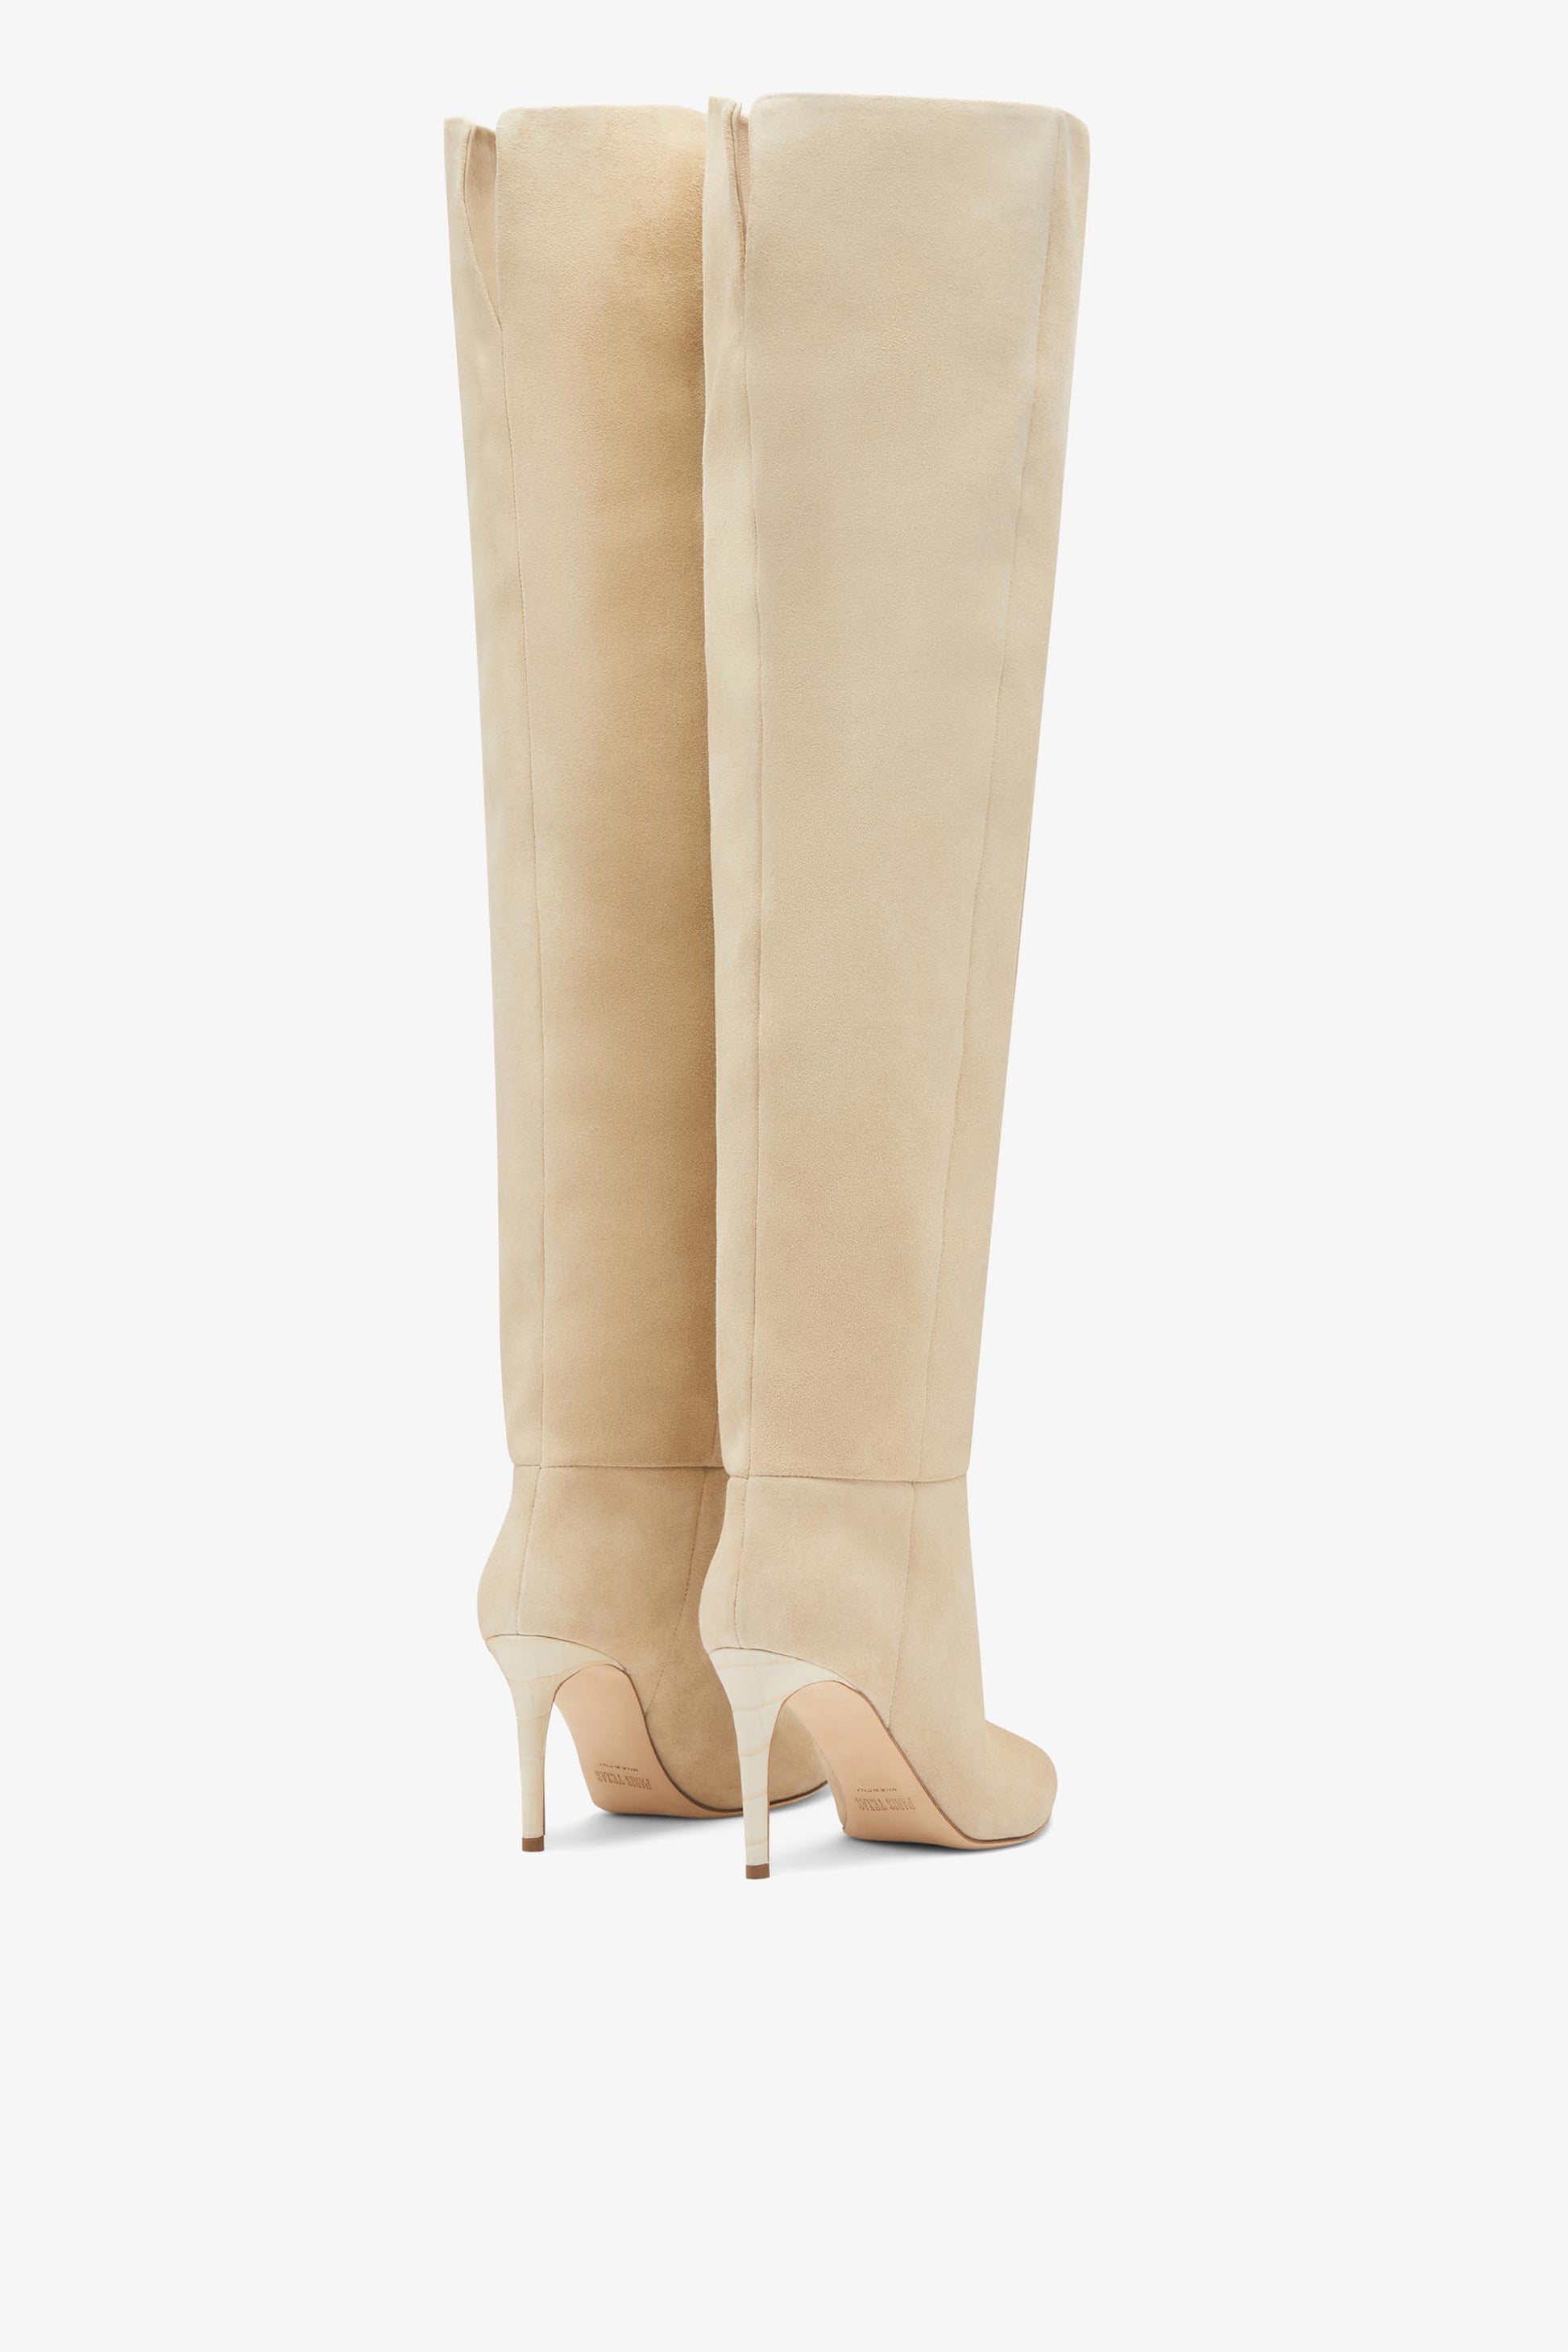 Overknee-Stiefel aus angorafarbenem Kalbsveloursleder mit 85 mm-Absatz